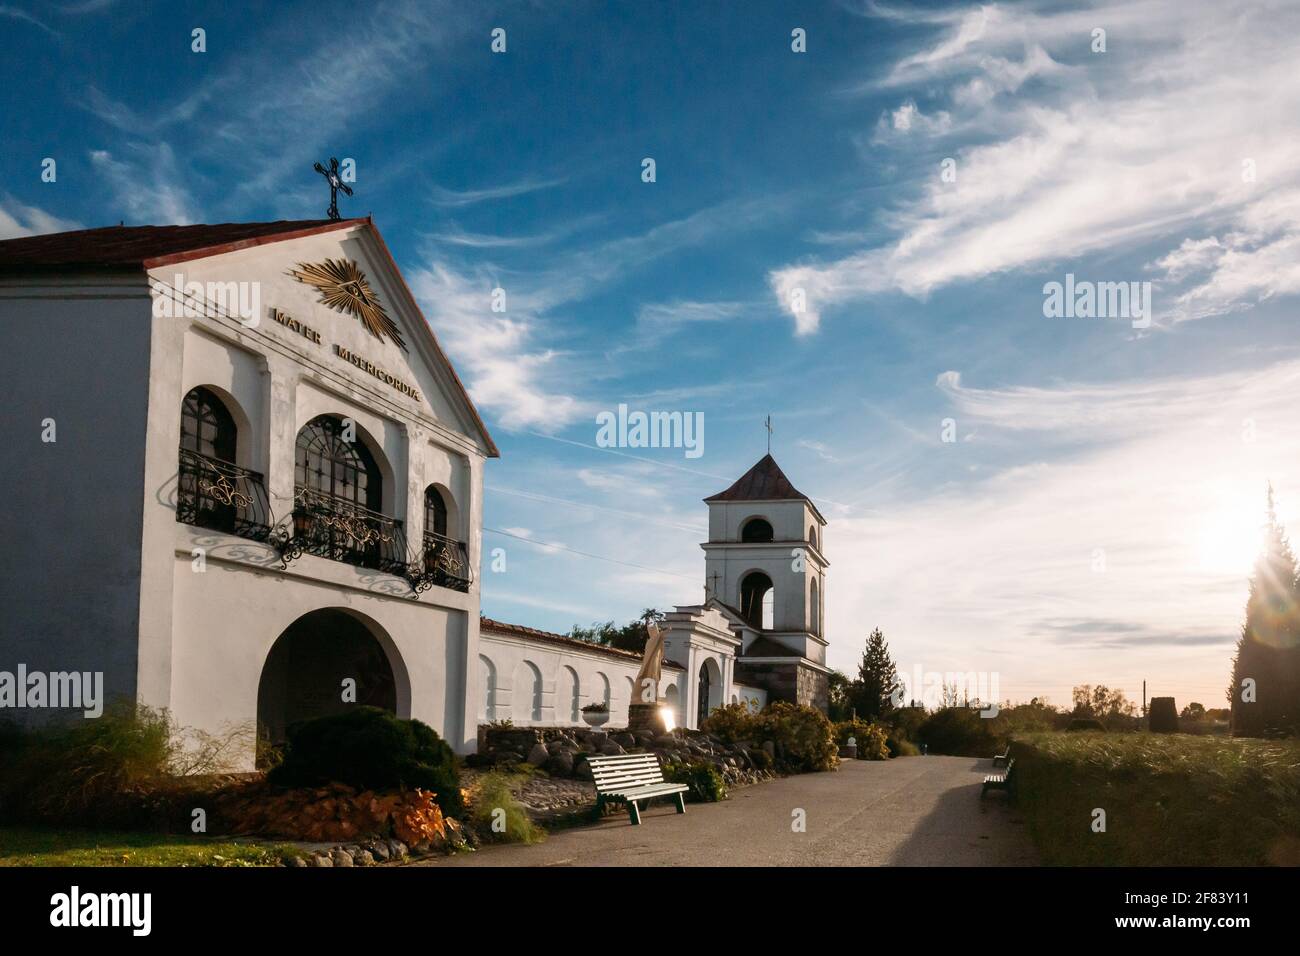 Mosar, Vitebsk Region, Belarus. Church Of St. Anne In Sunny Day. Stock Photo